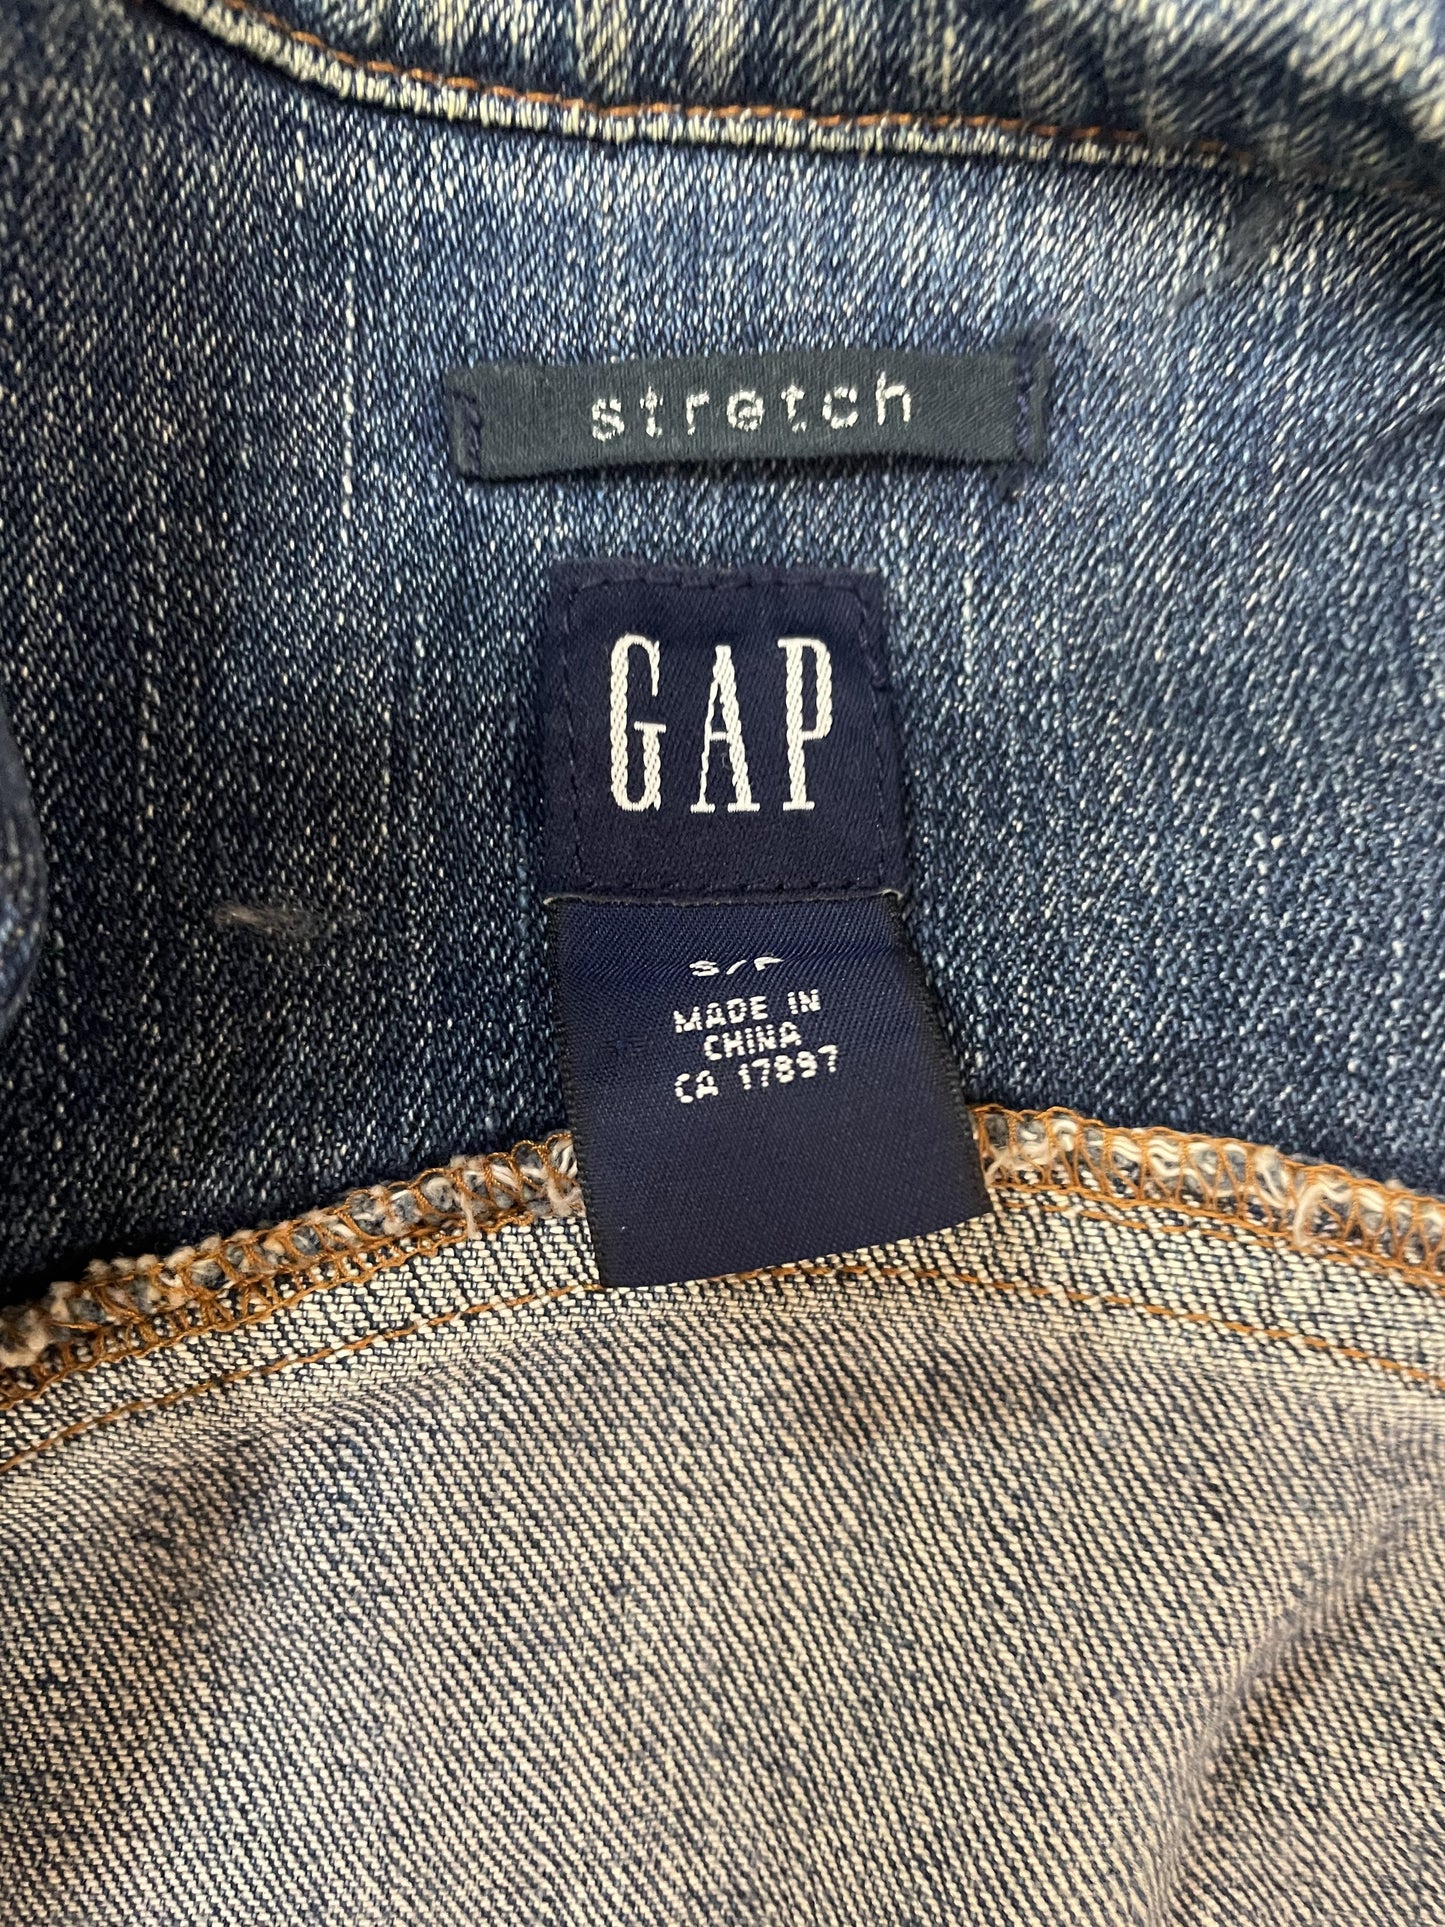 Vintage Gap Denim Jacket General Vintage 